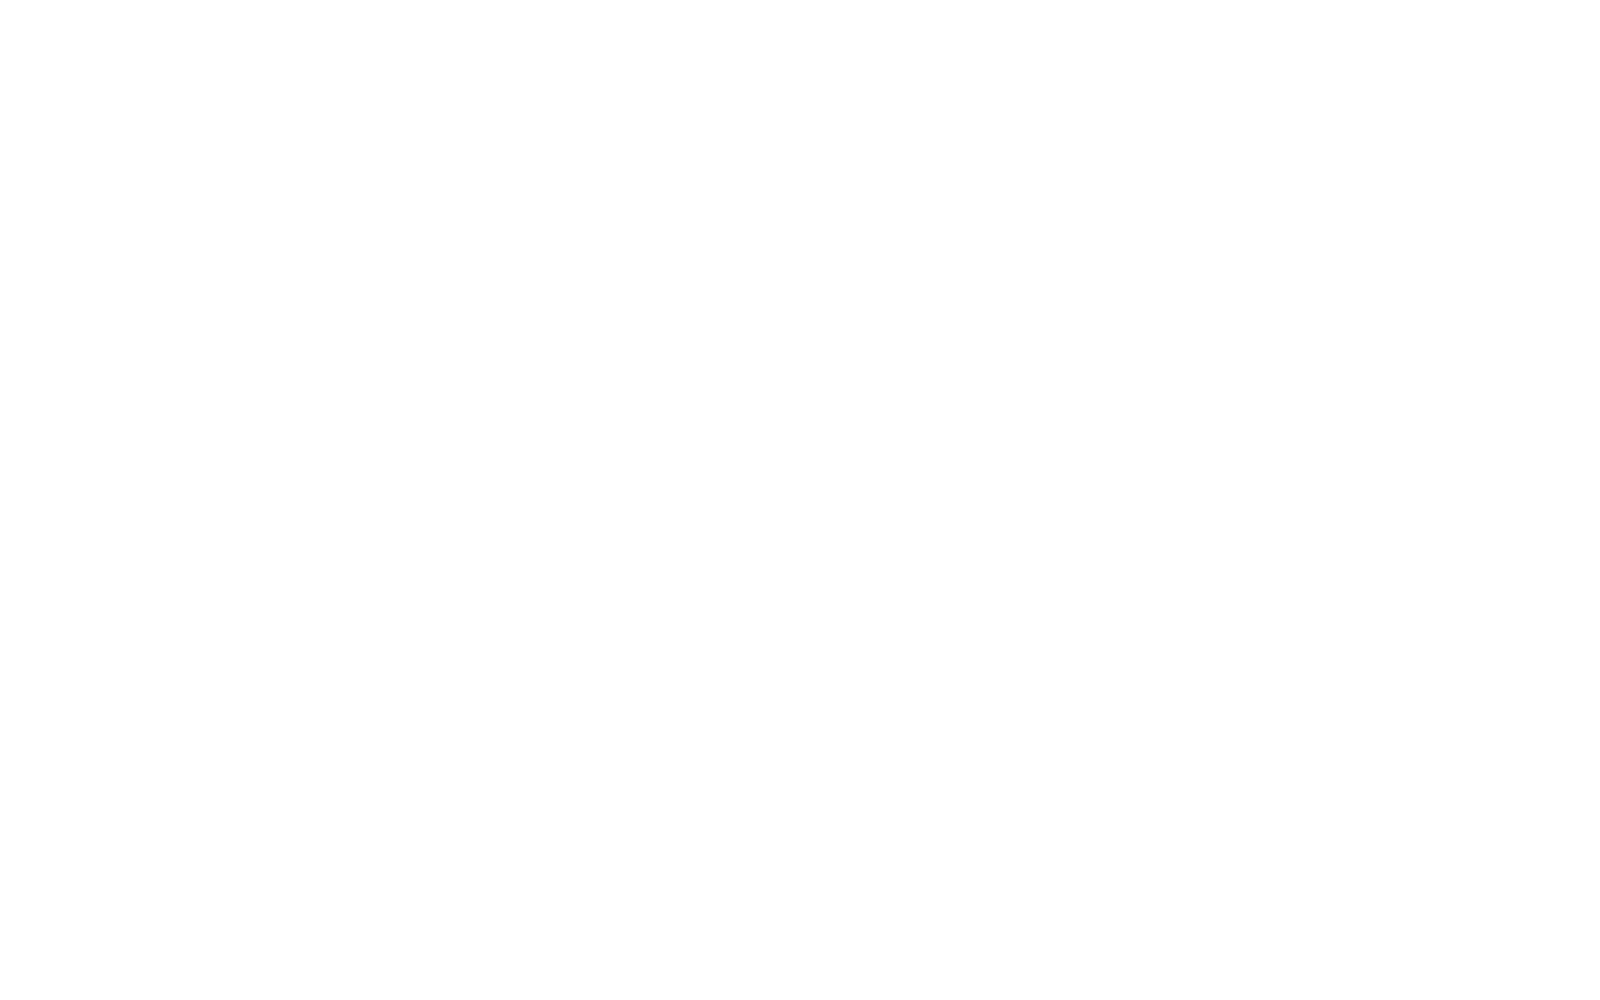 Will Betts